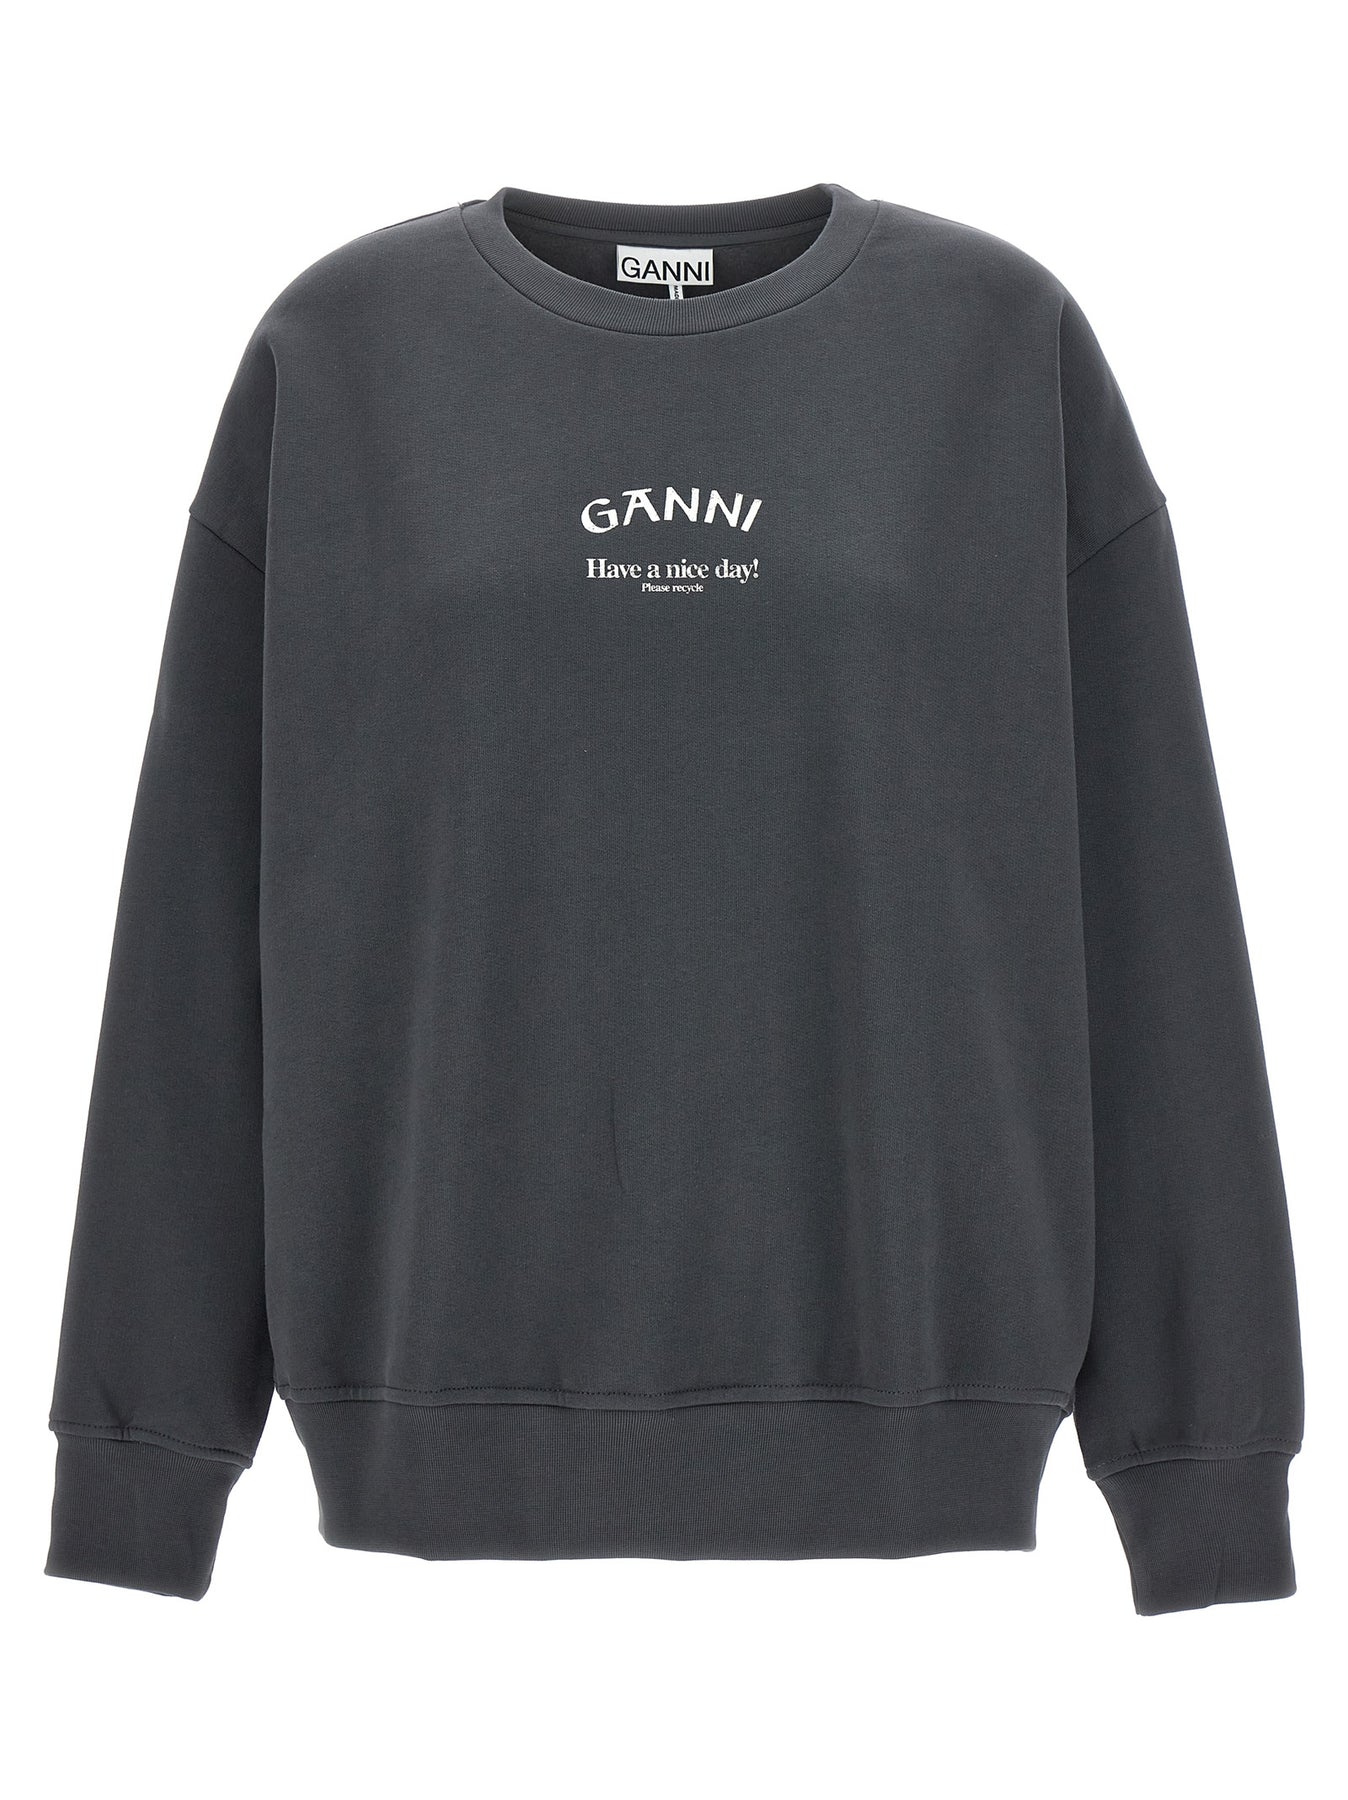 Shop Ganni Have A Nice Day! Sweatshirt